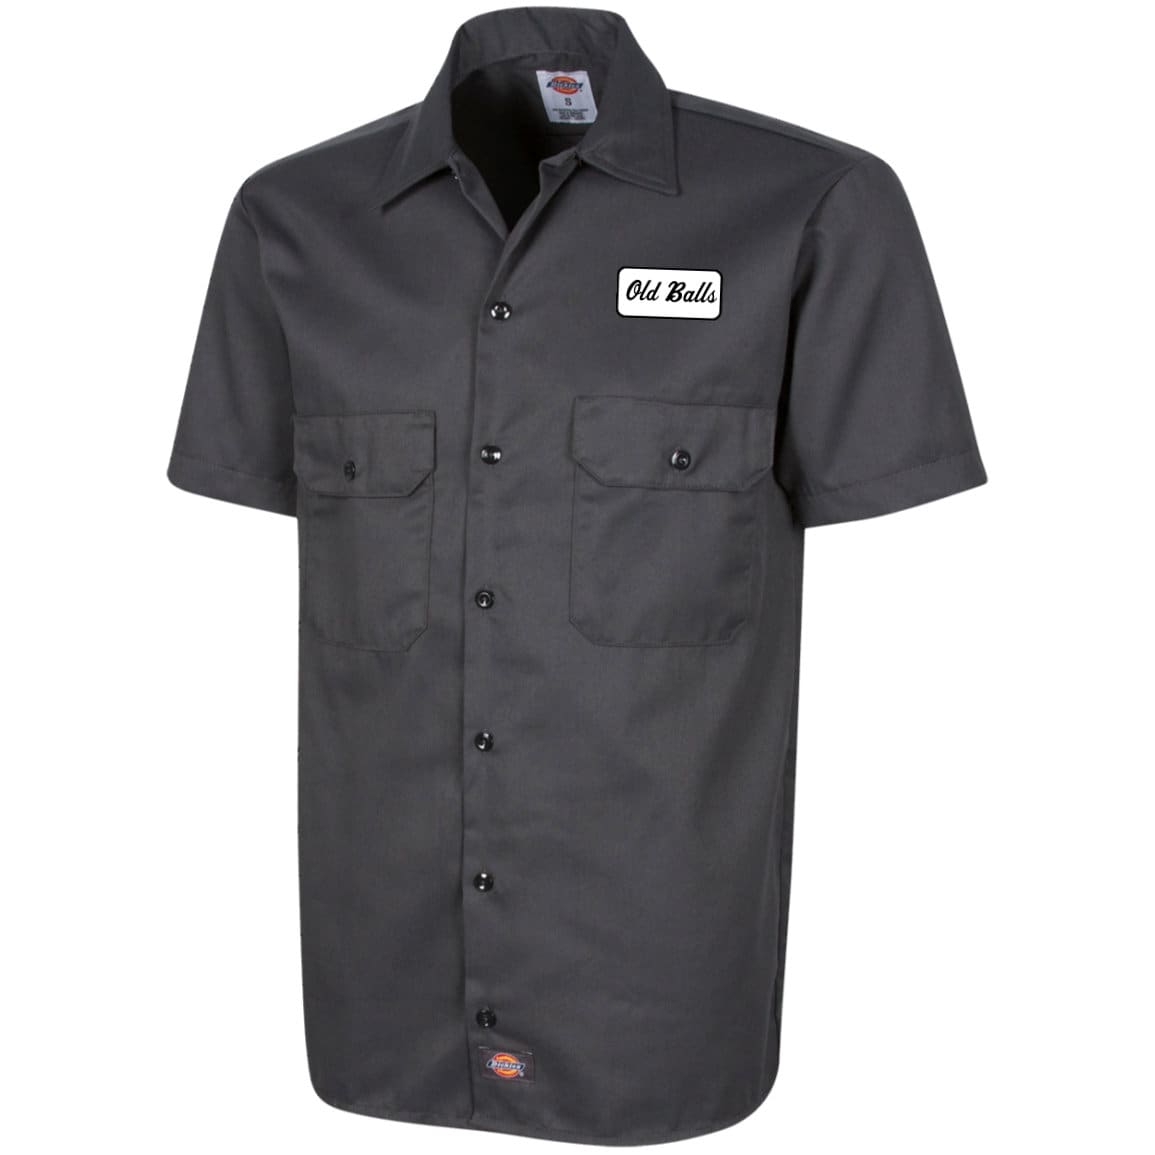 Custom Men's Name Tag Short Sleeve Work shirt for Old | Etsy